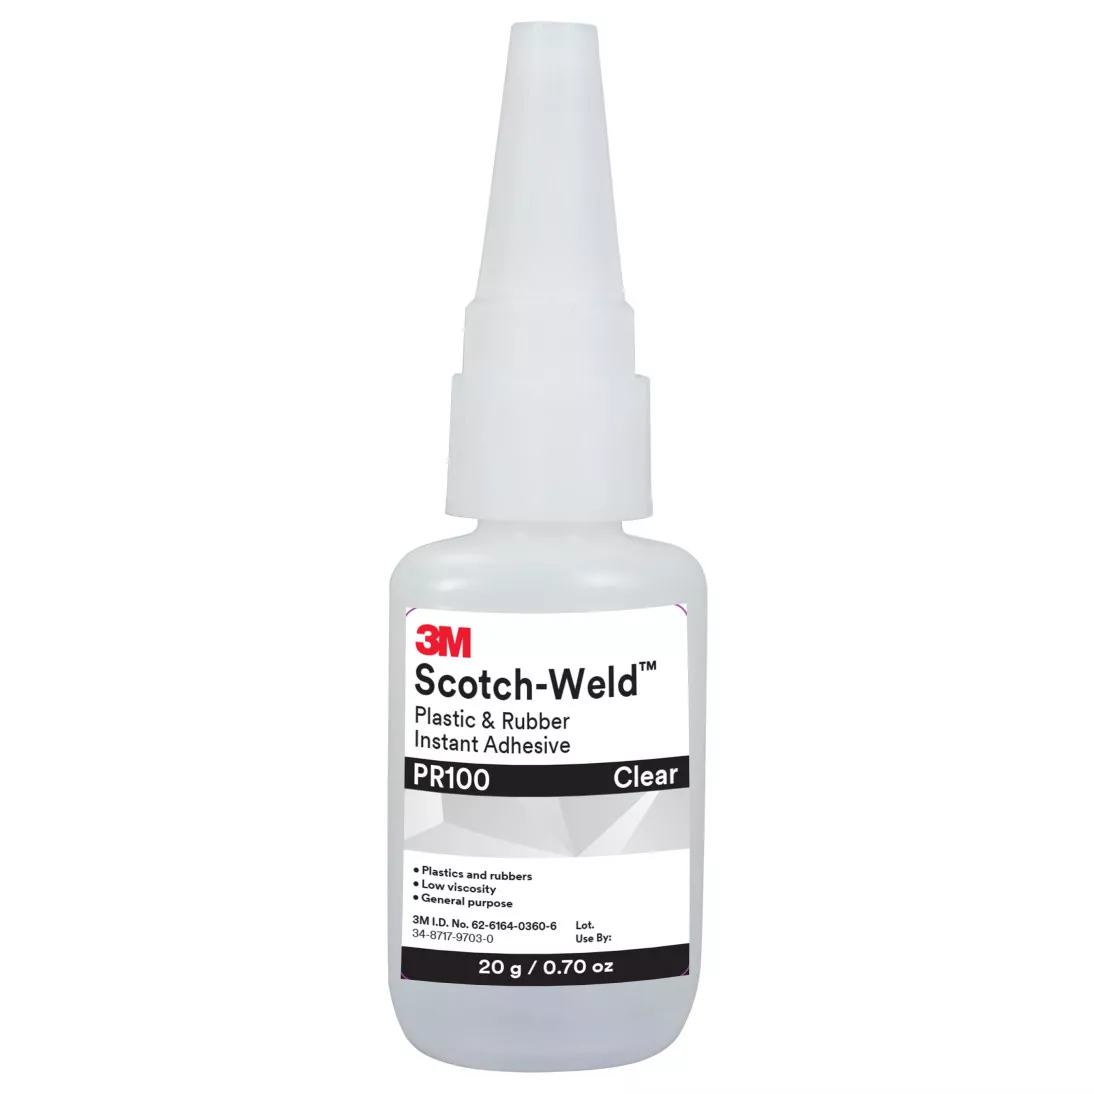 3M™ Scotch-Weld™ Plastic & Rubber Instant Adhesive PR100, Clear, 20 Gram
Bottle, 10/case